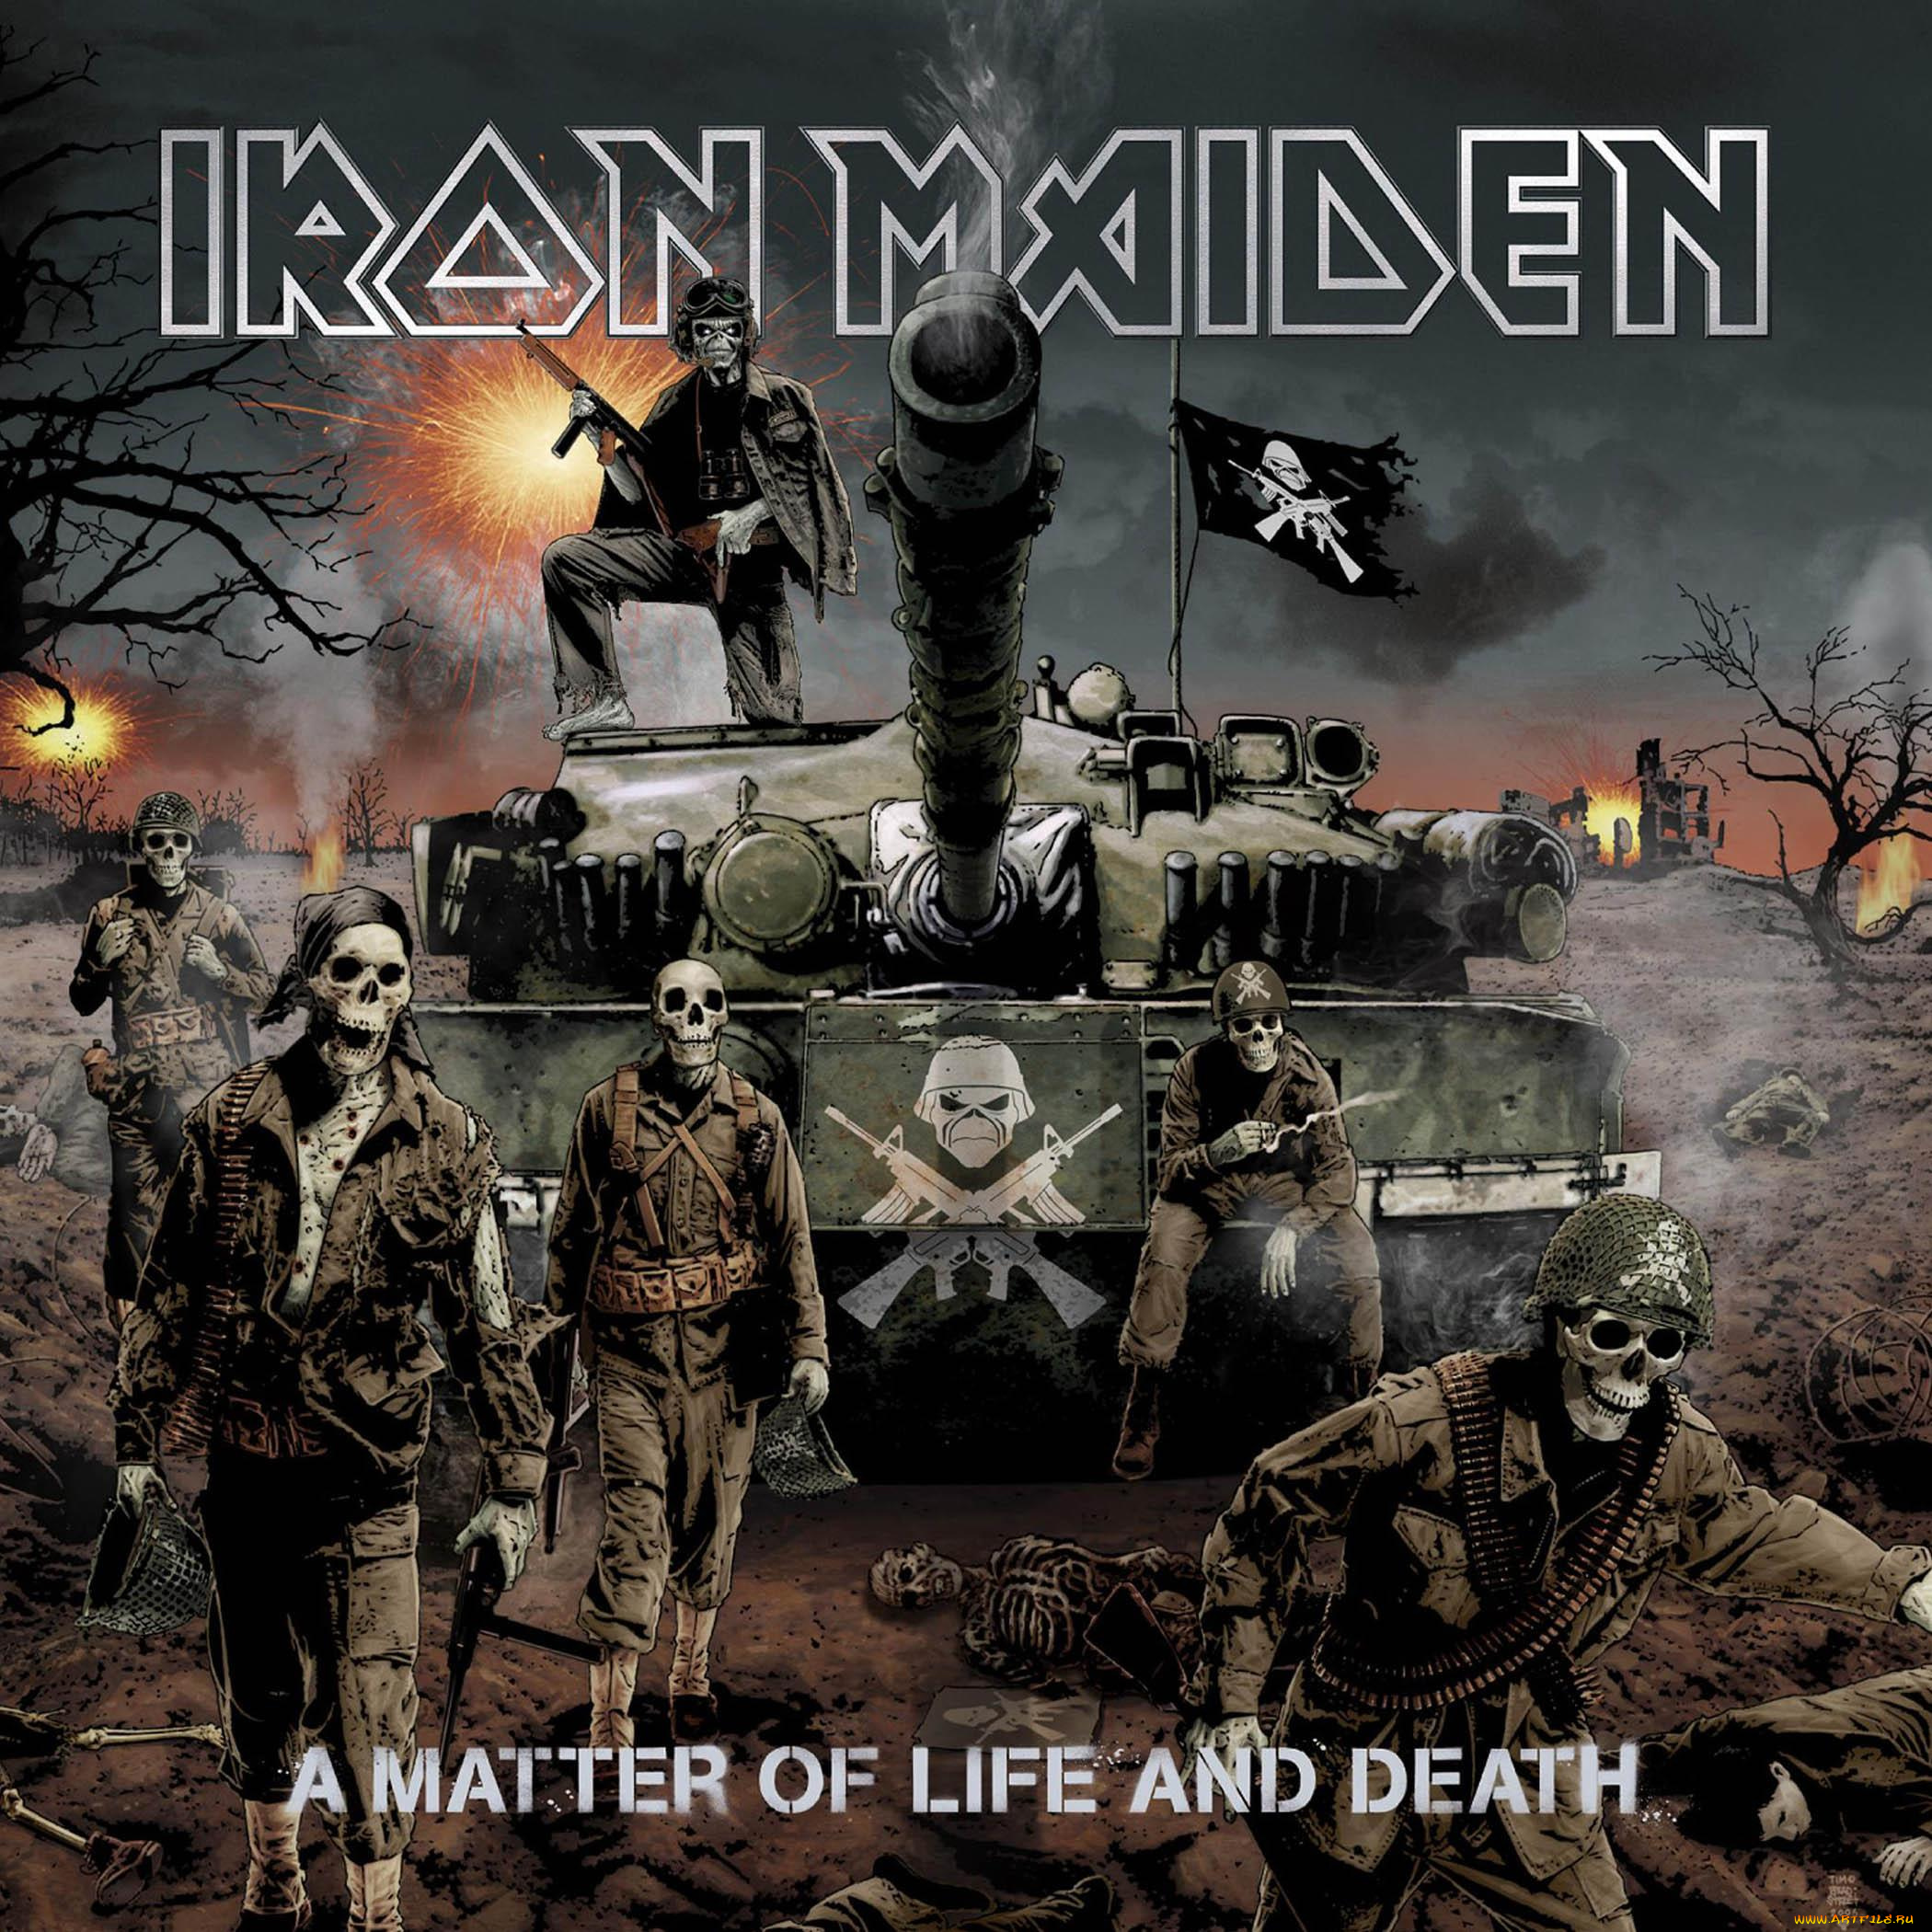 iron, maiden, музыка, хеви-метал, великобритания